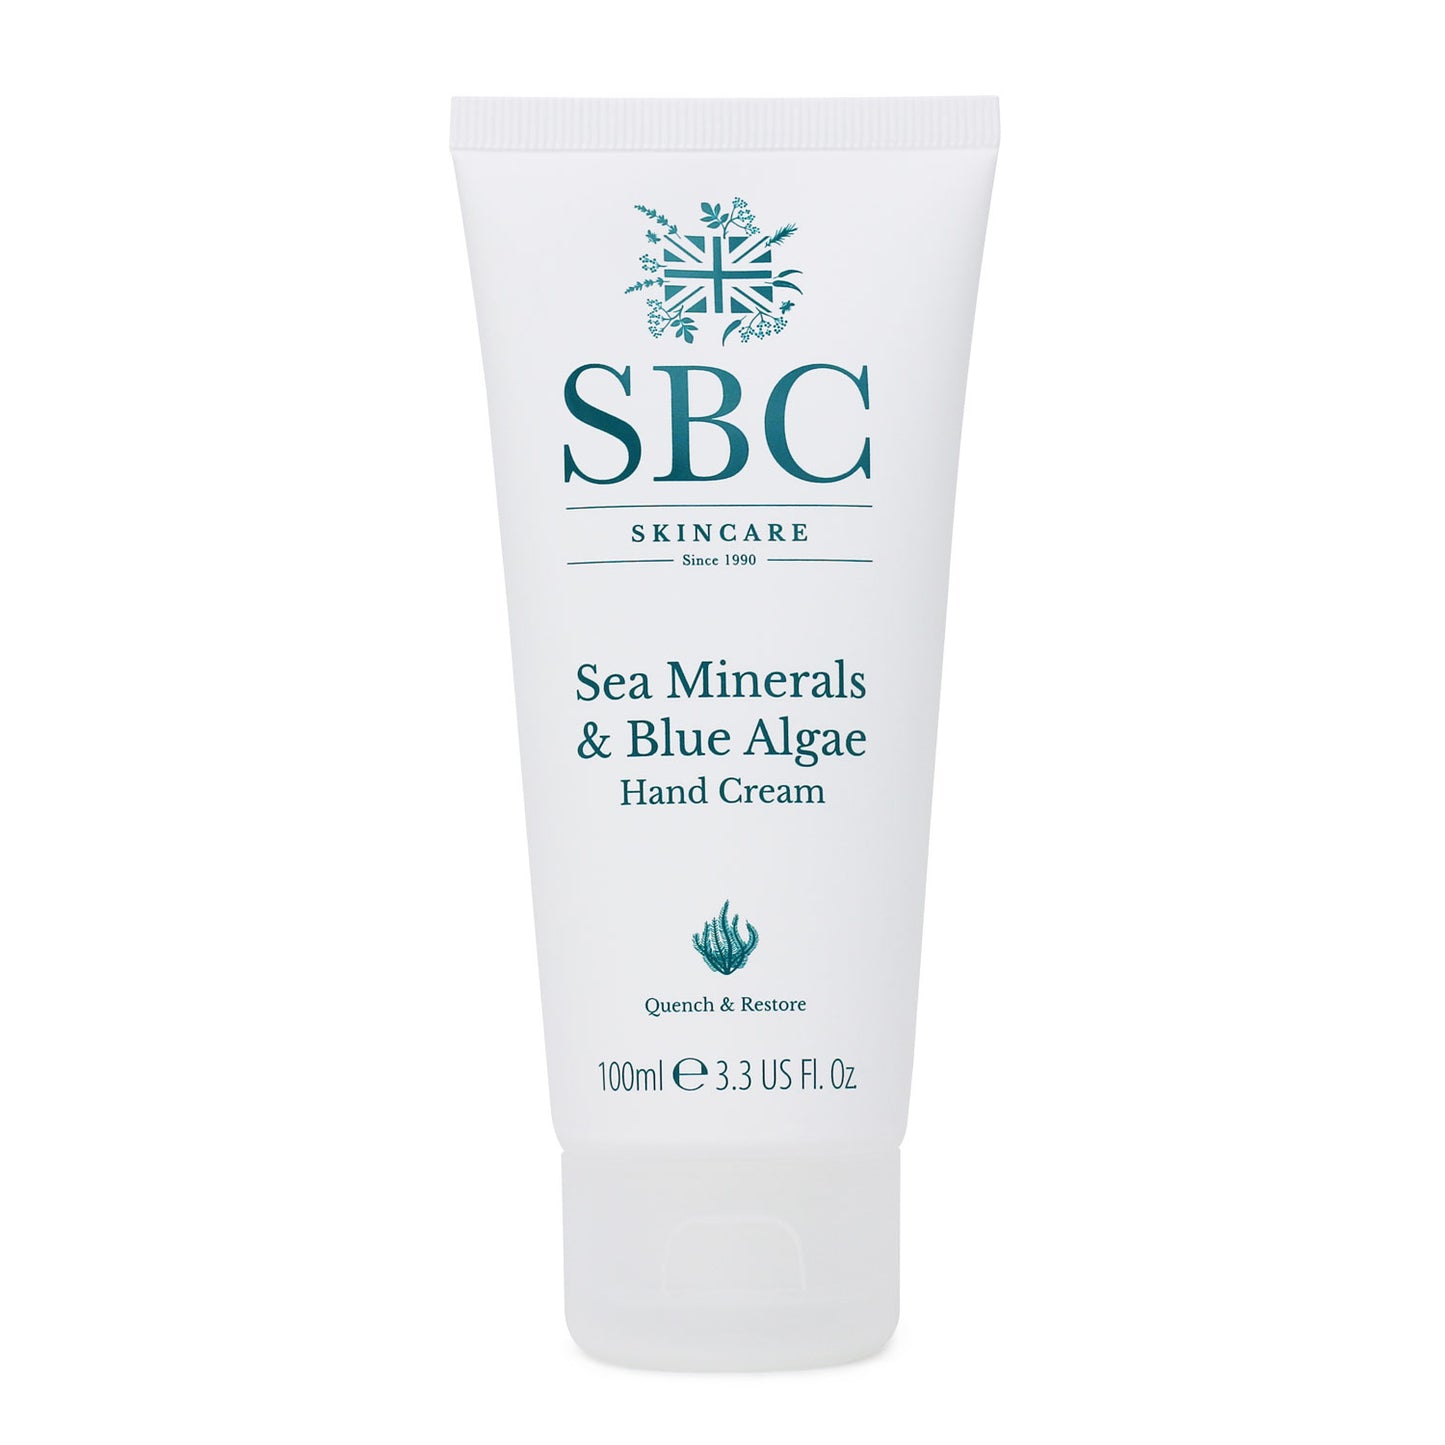 Sea Minerals & Blue Algae Hand Cream 100ml on a white background